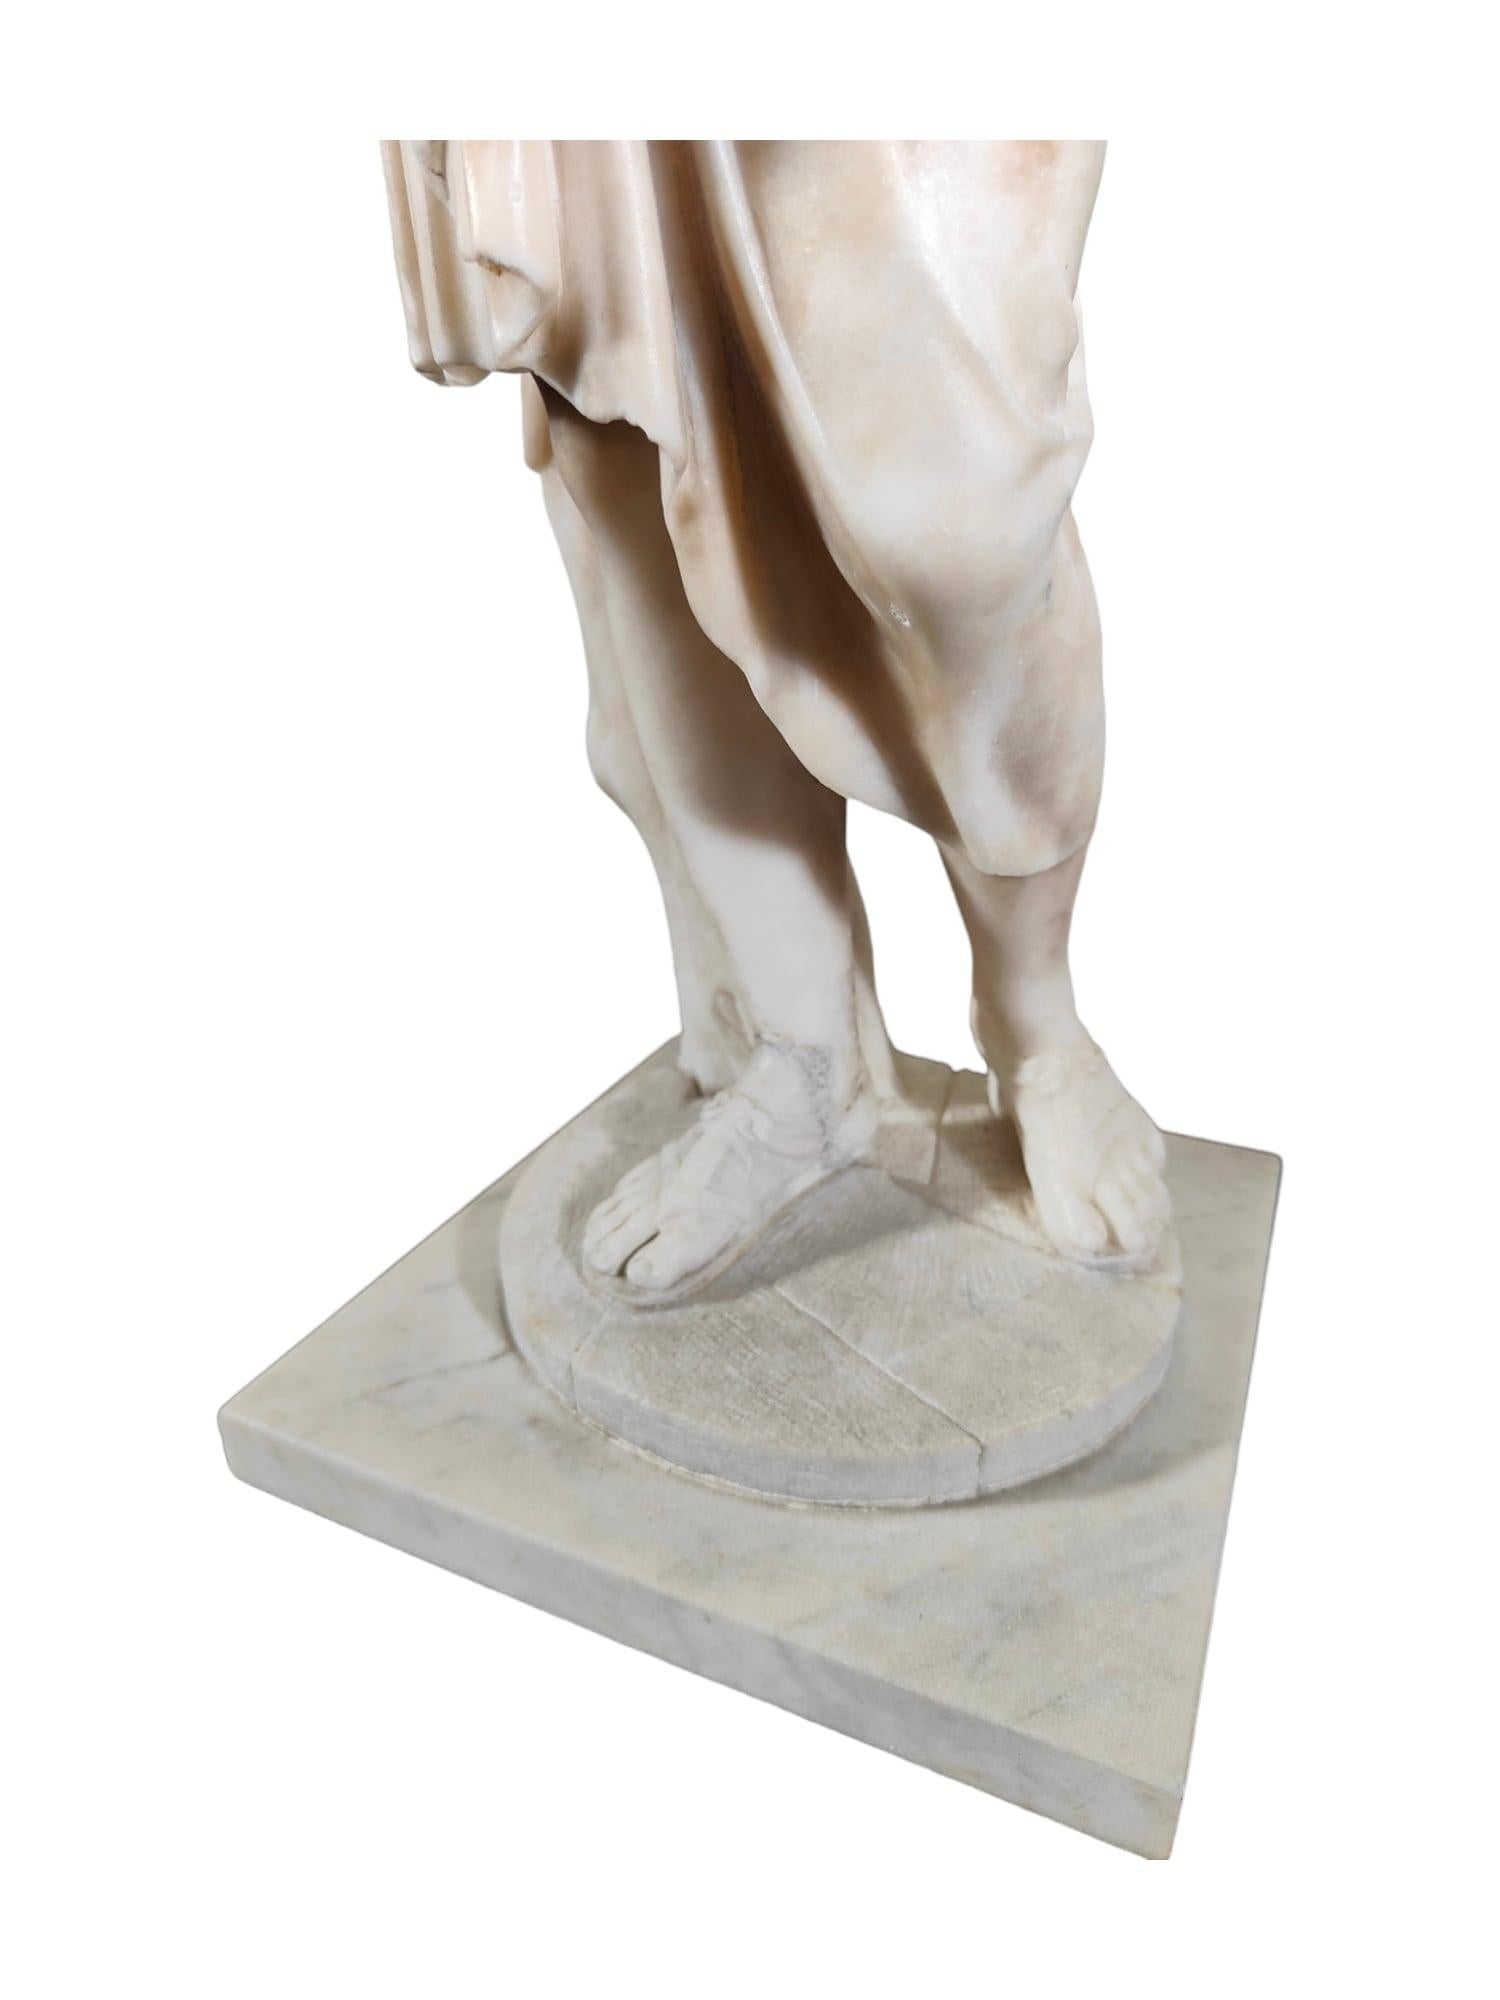 Diana de Gabios sculpture en marbre 19ème siècle en vente 1